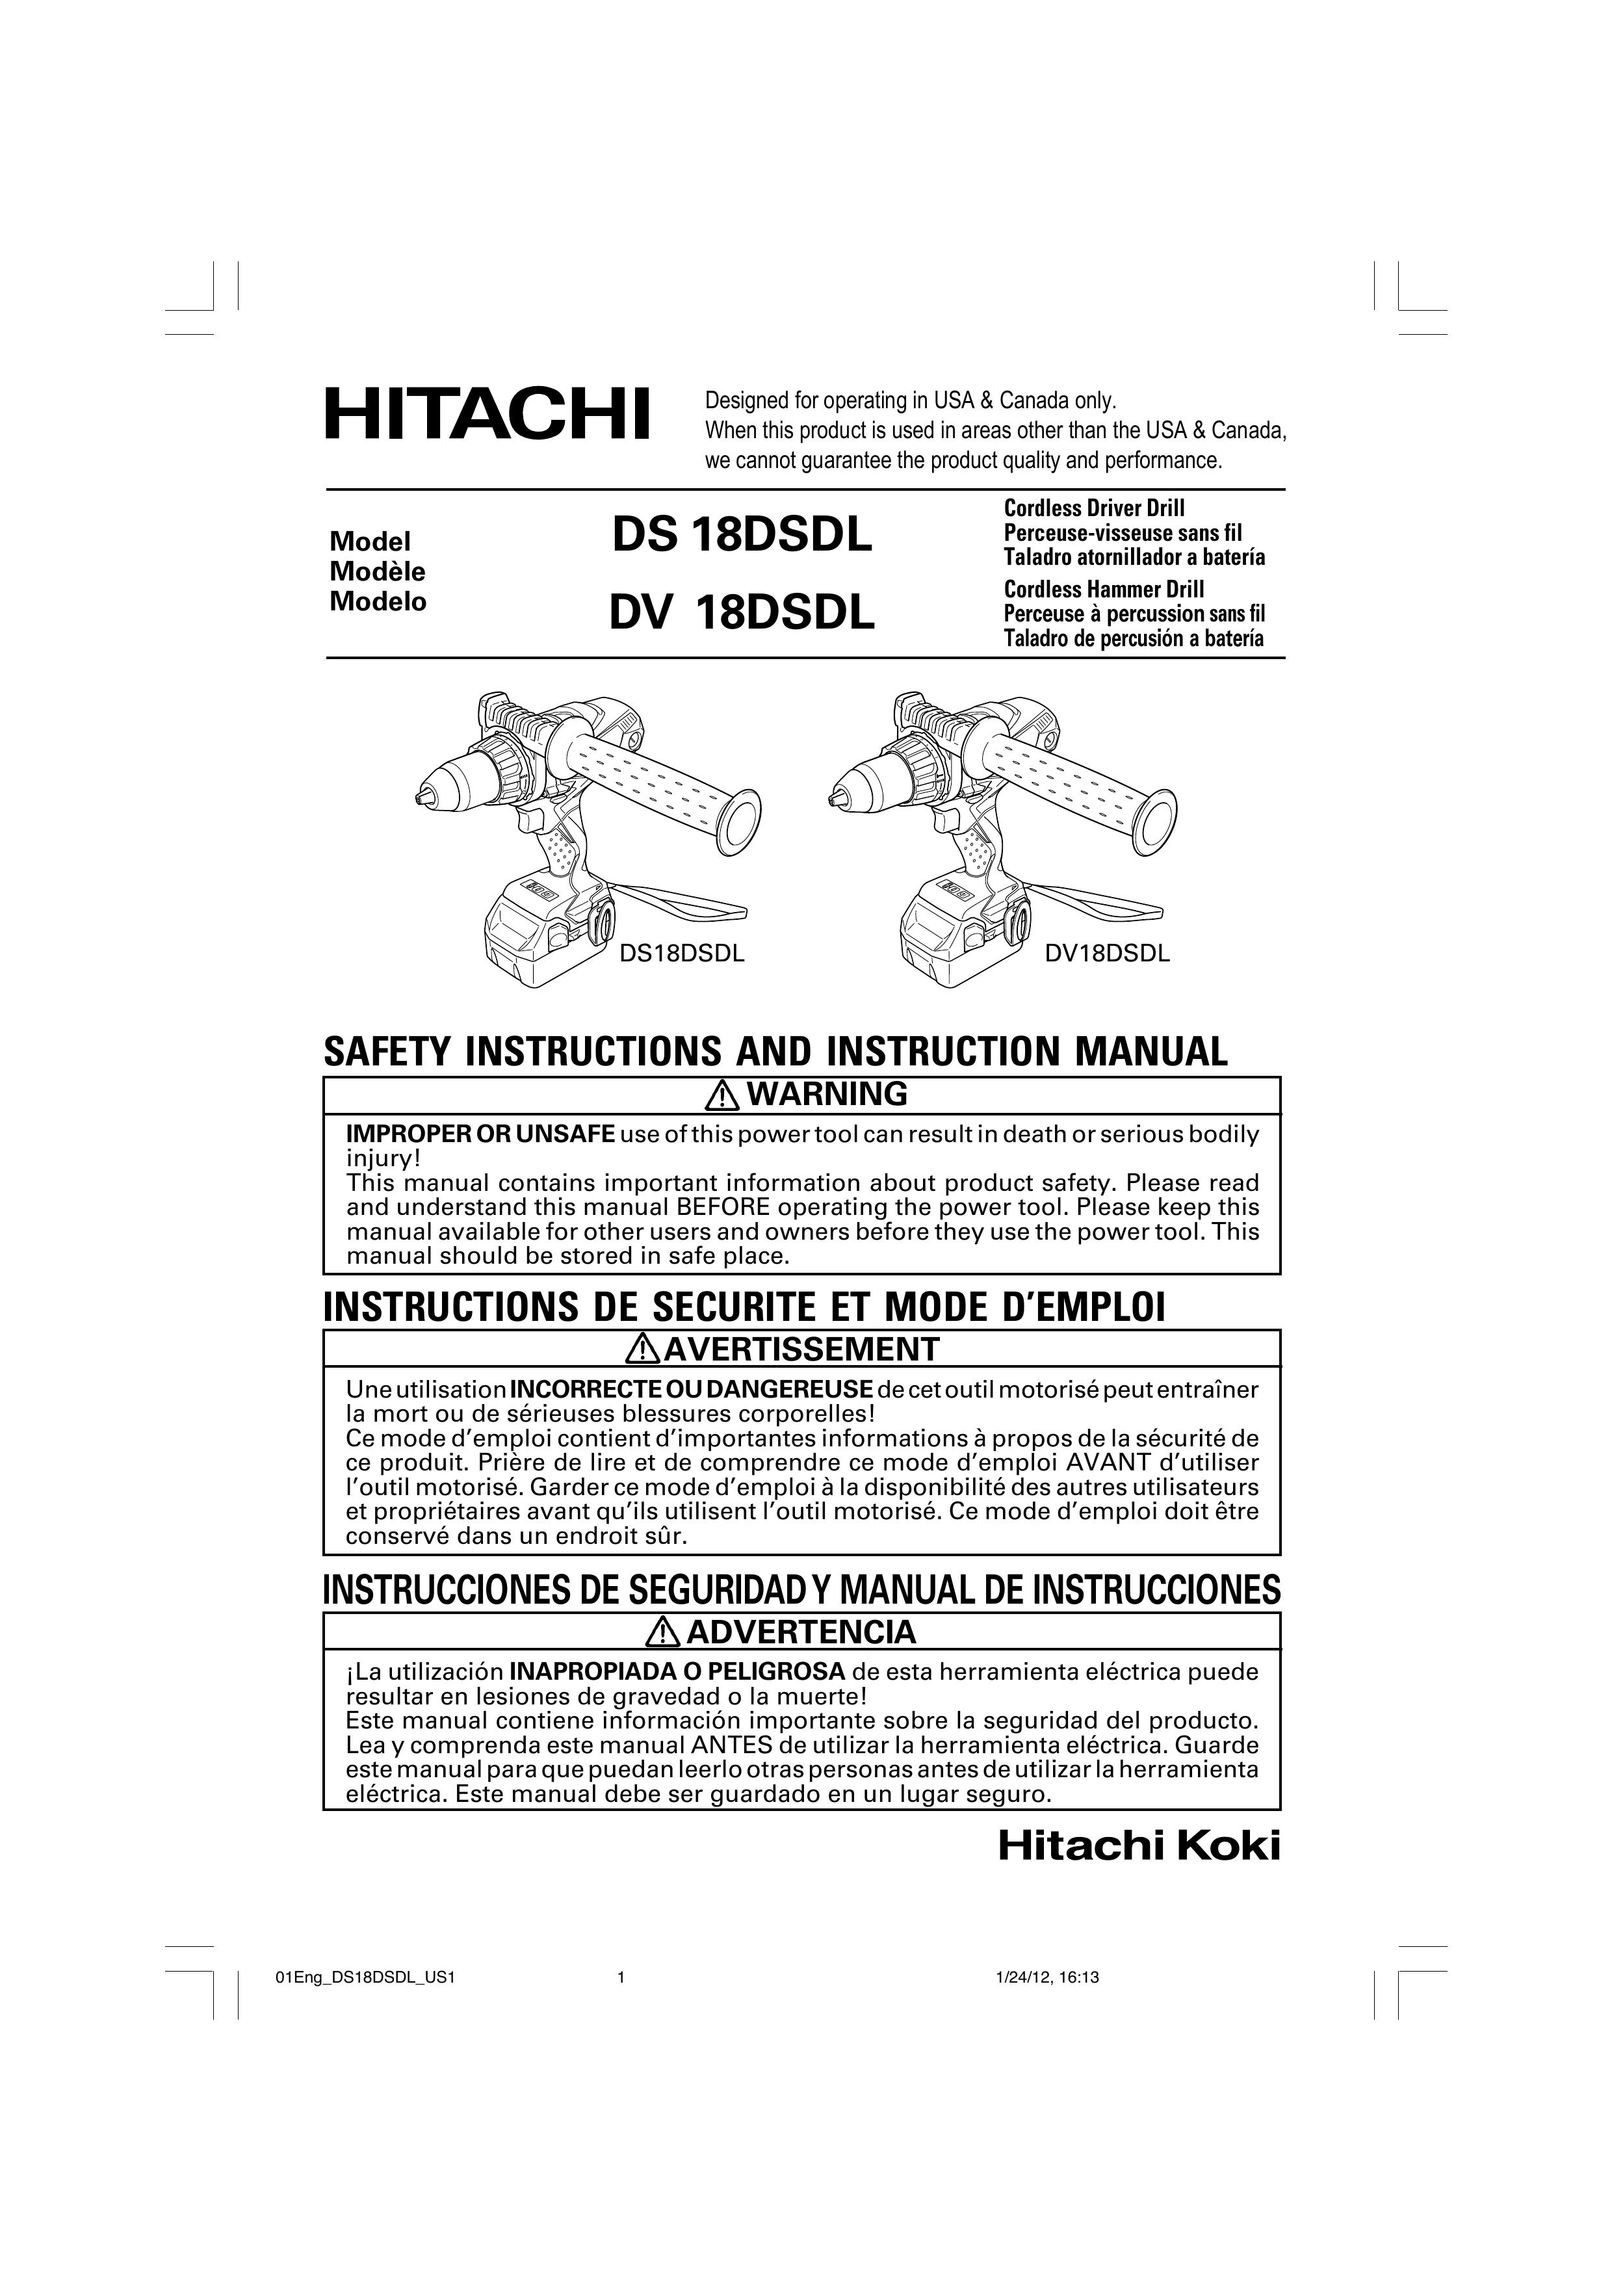 Hitachi DS18DSDLP4 Cordless Drill User Manual